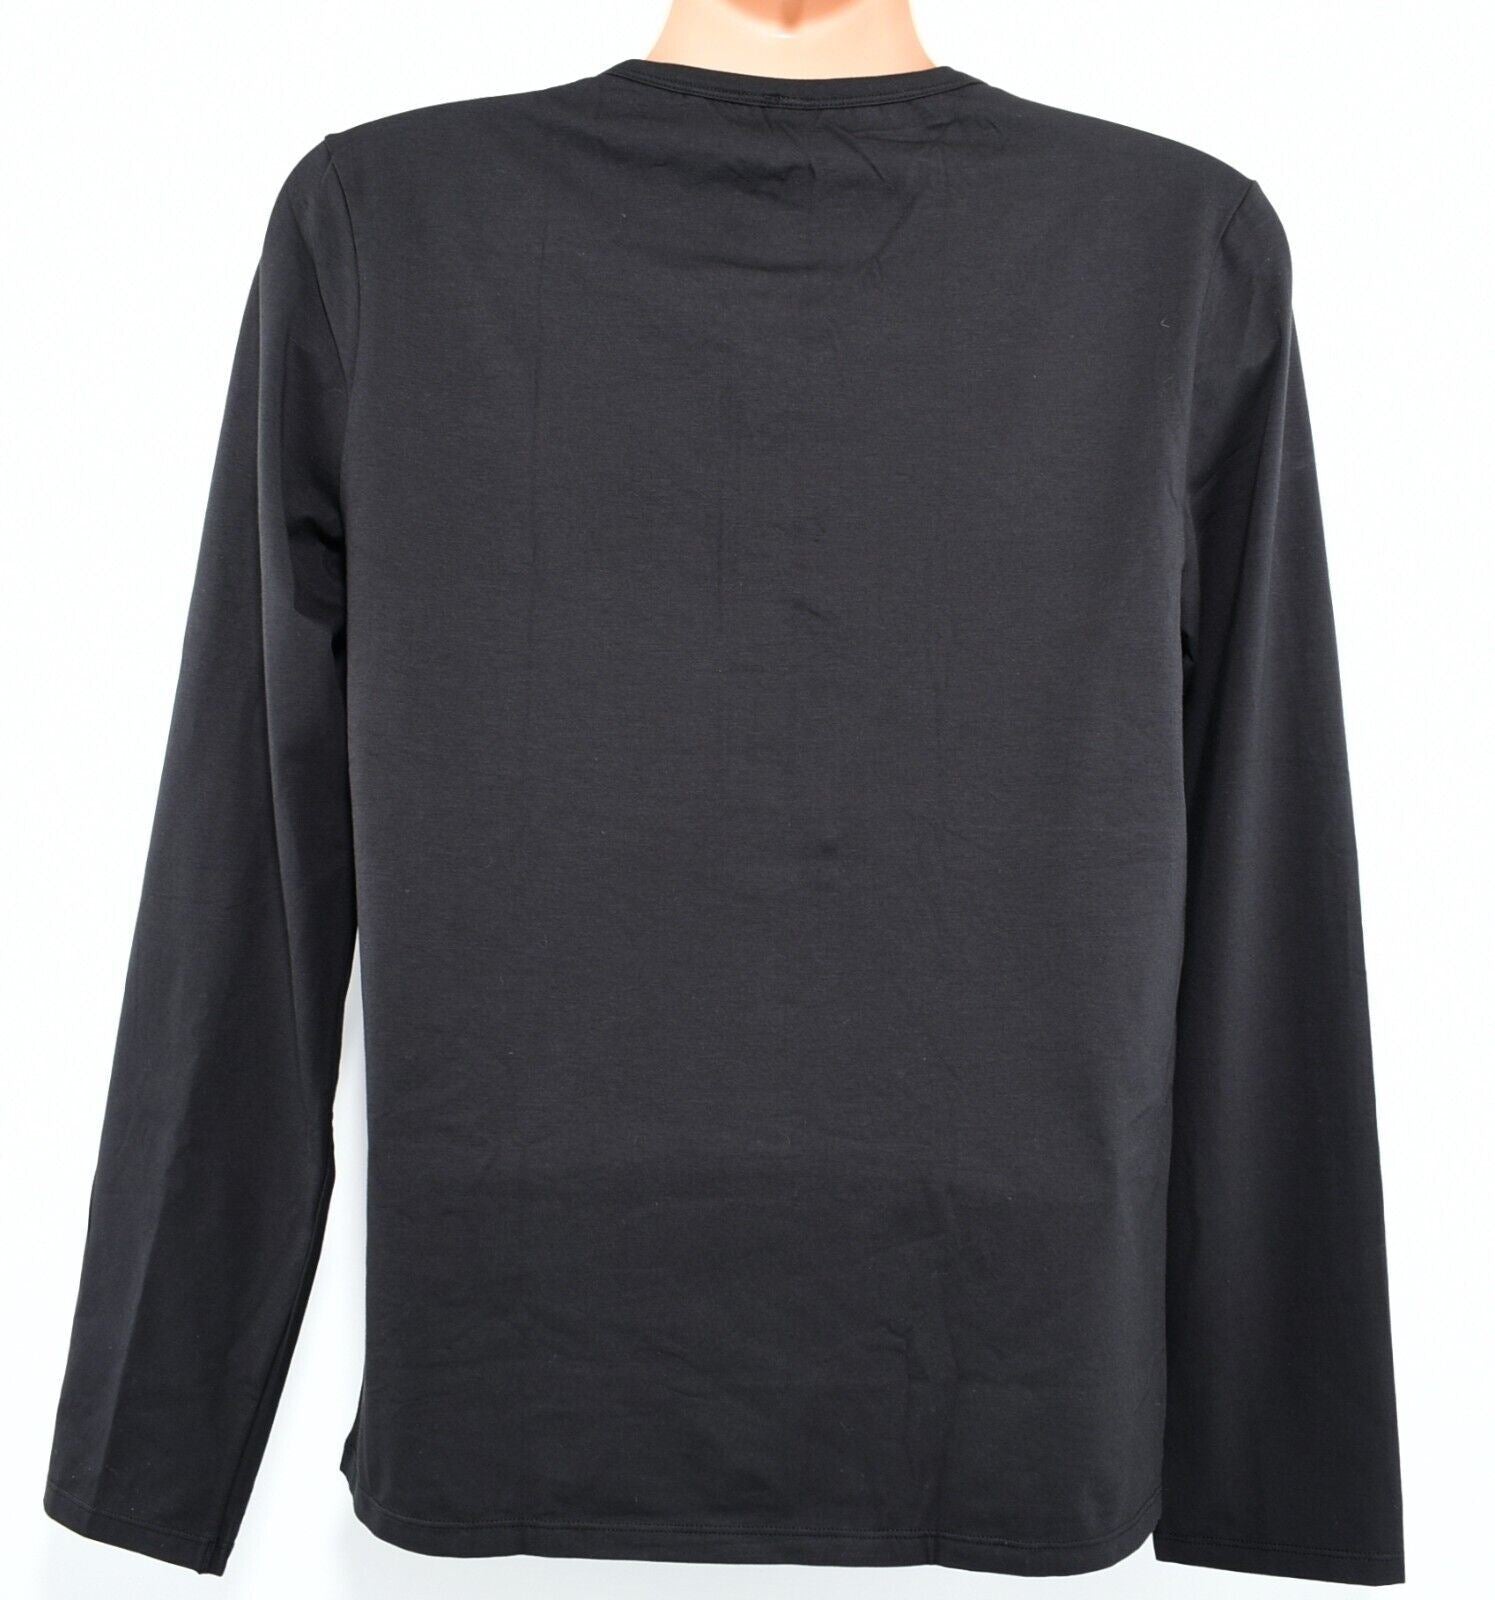 JOHN GALLIANO Underwear: Mens Long Sleeve Lounge T-shirt Top, Black, size LARGE